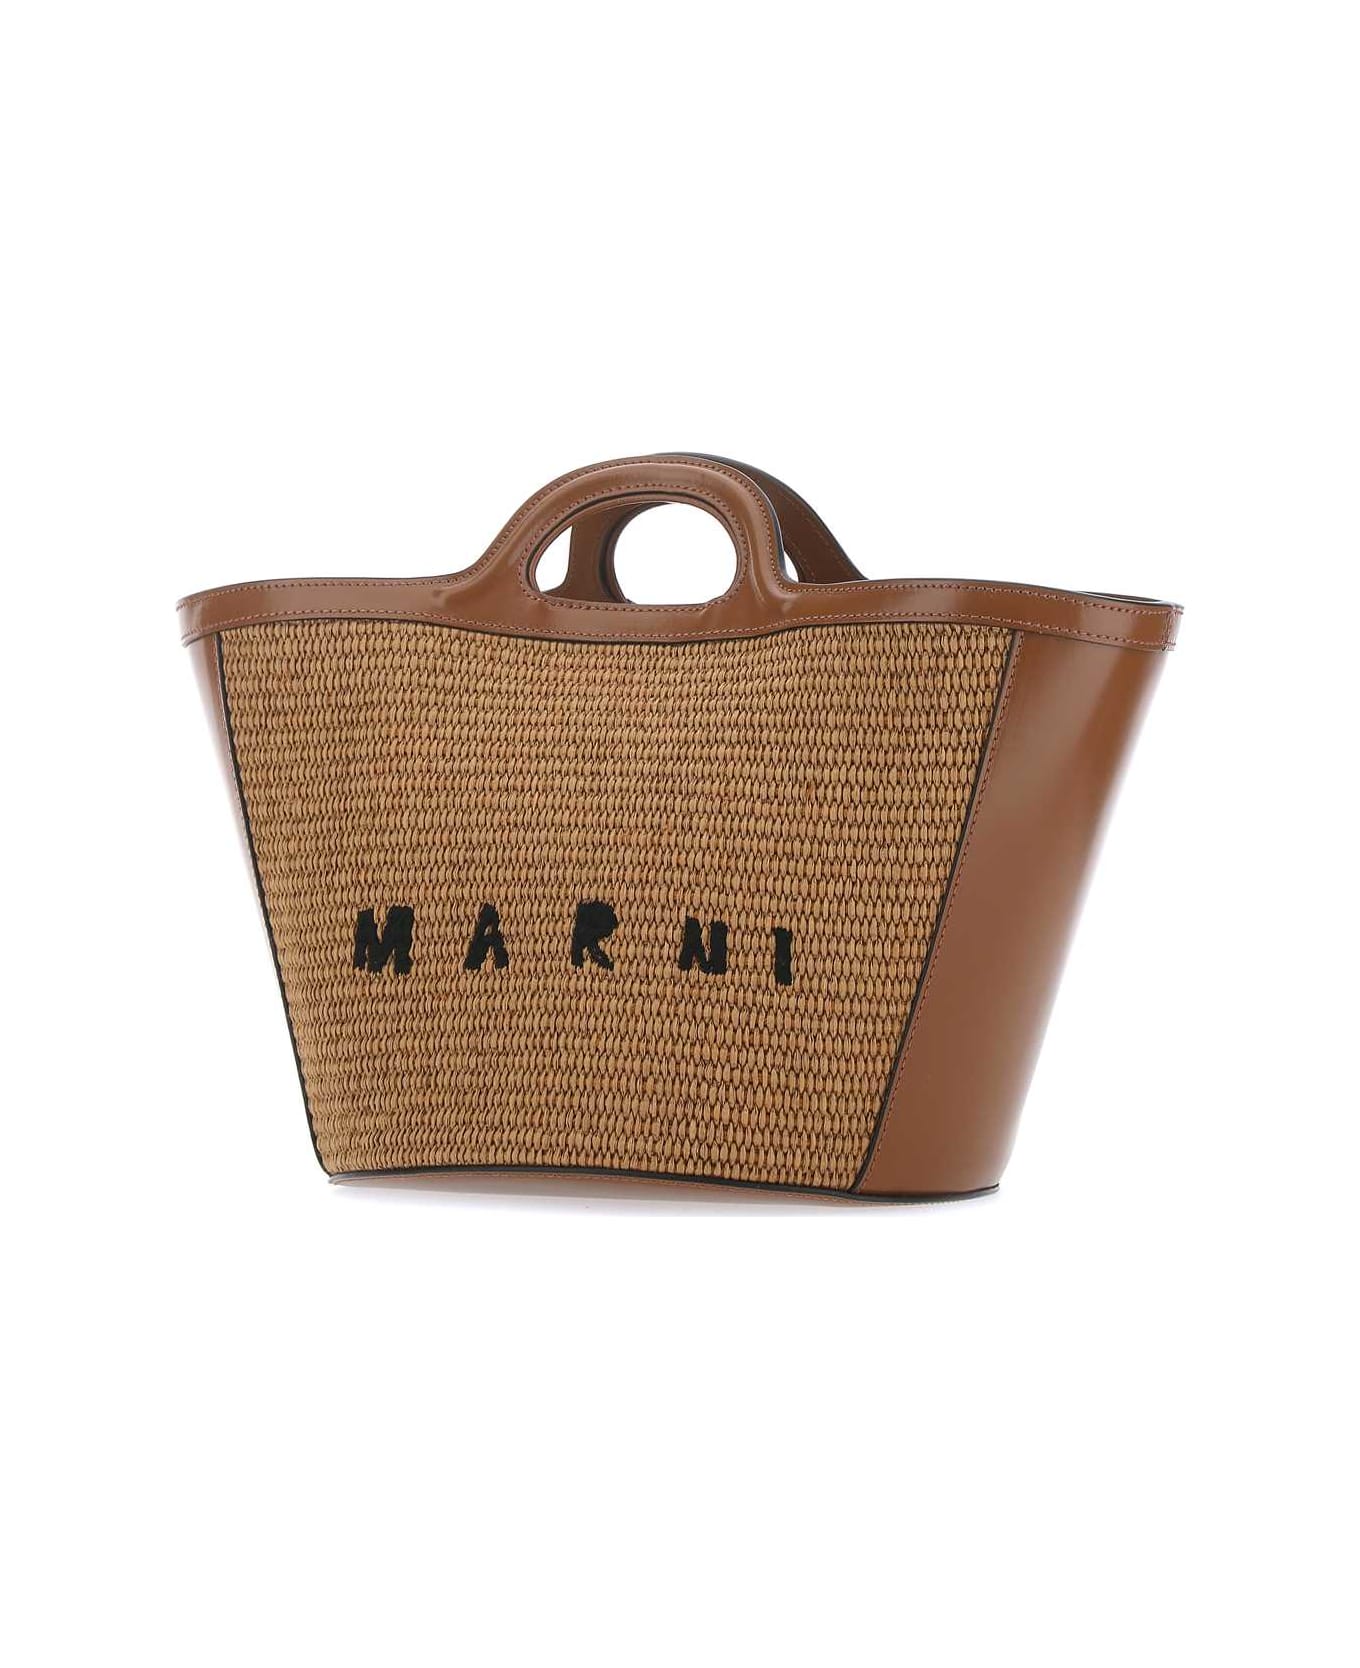 Marni Two-tone Leather And Raffia Small Tropicalia Summer Handbag - RAW SIENNA